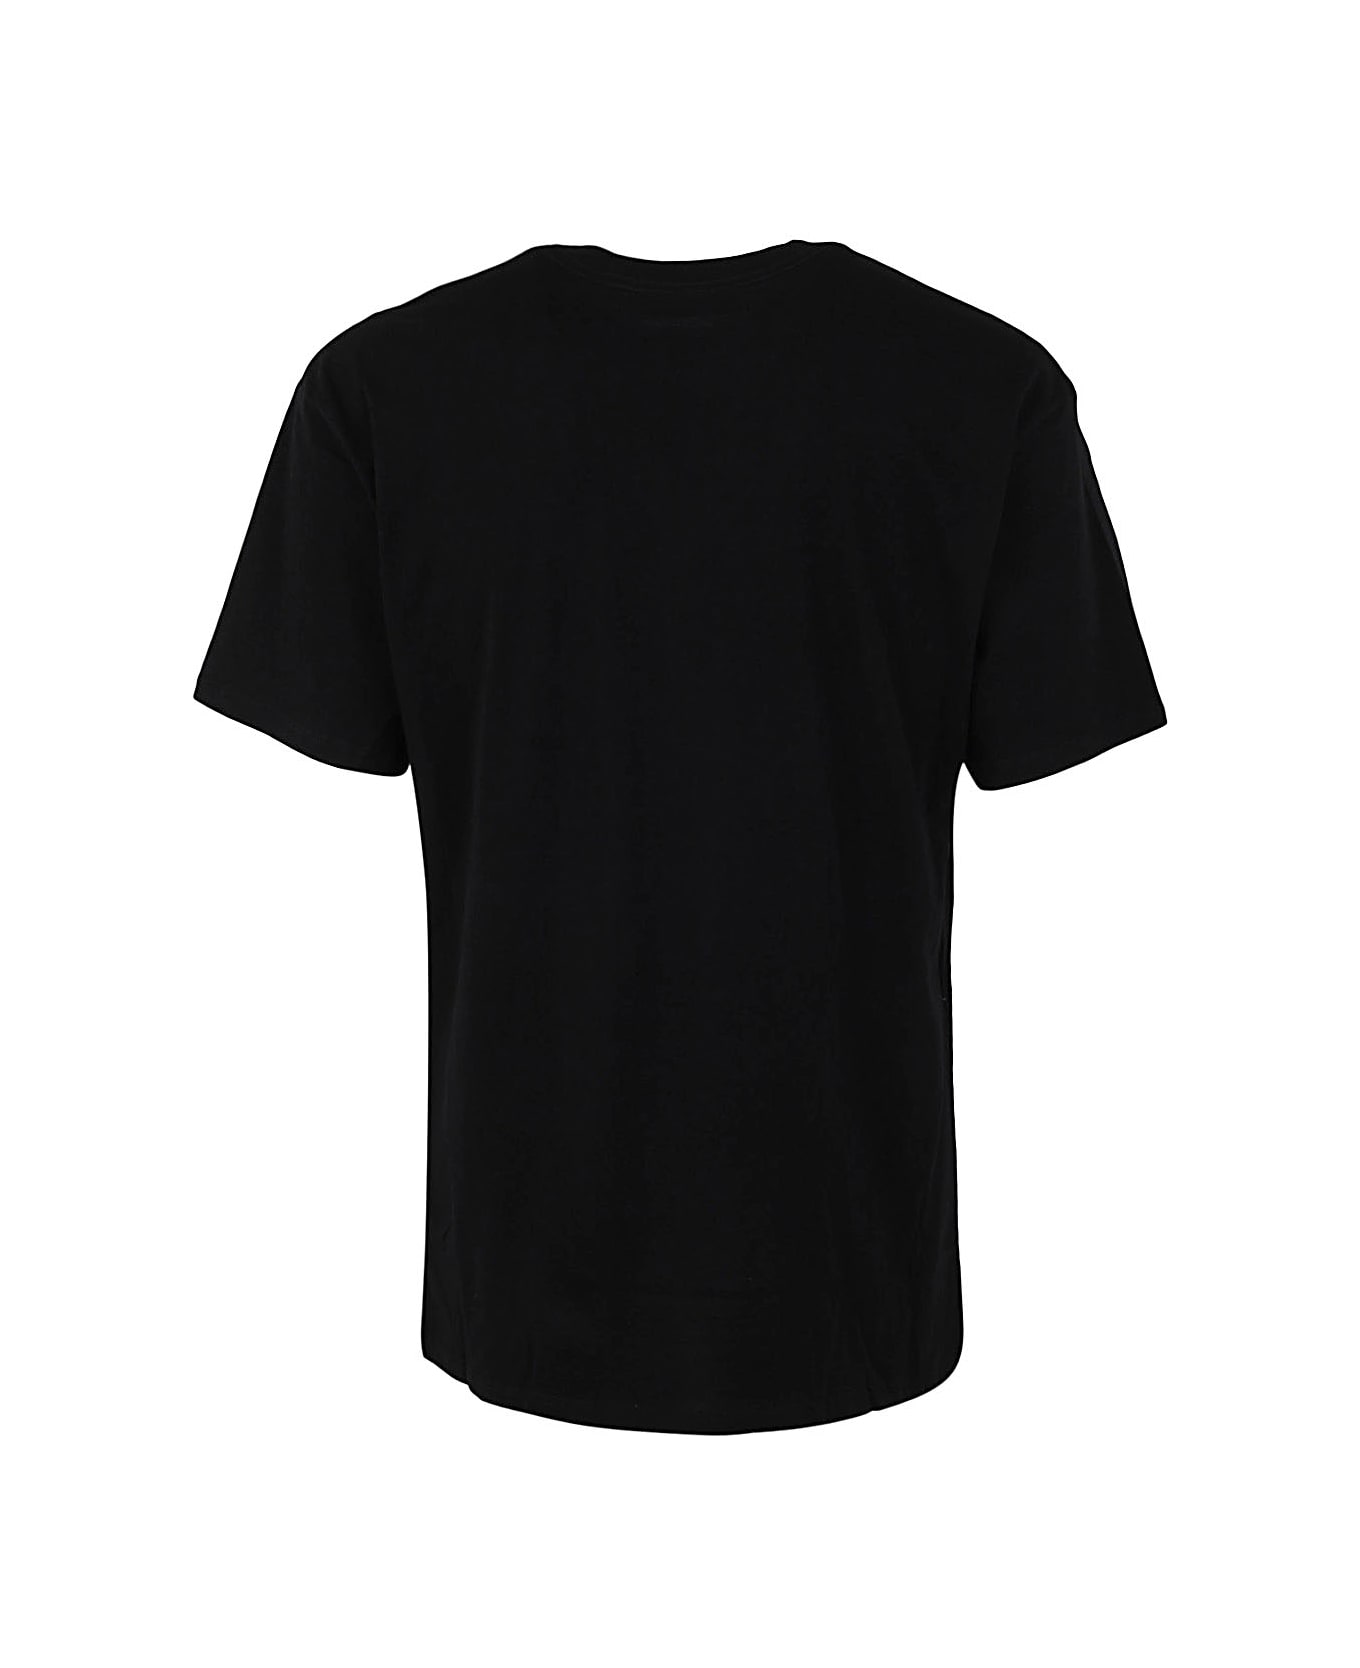 Nahmias Psychedelic T-shirt - Blk Black シャツ